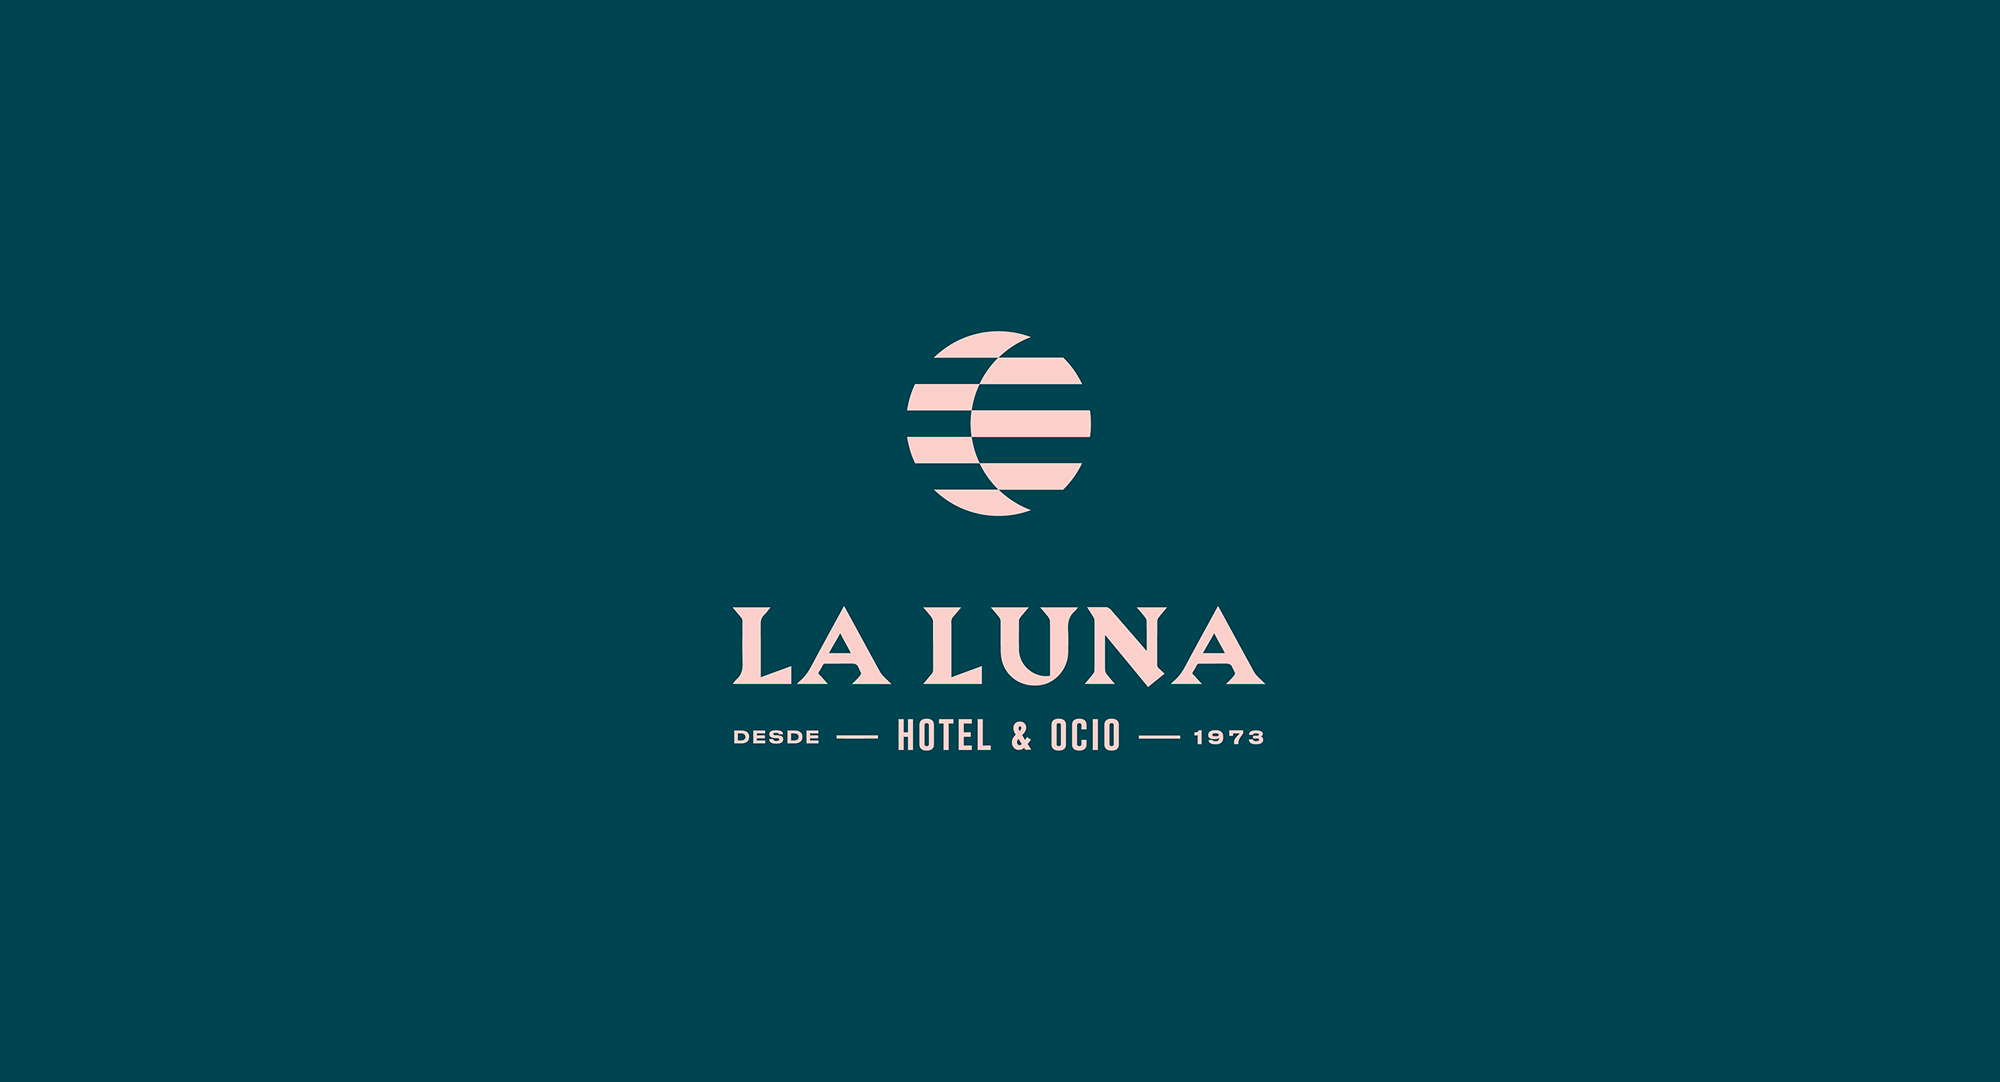 LA LUNA HOTEL - Neuma Branding